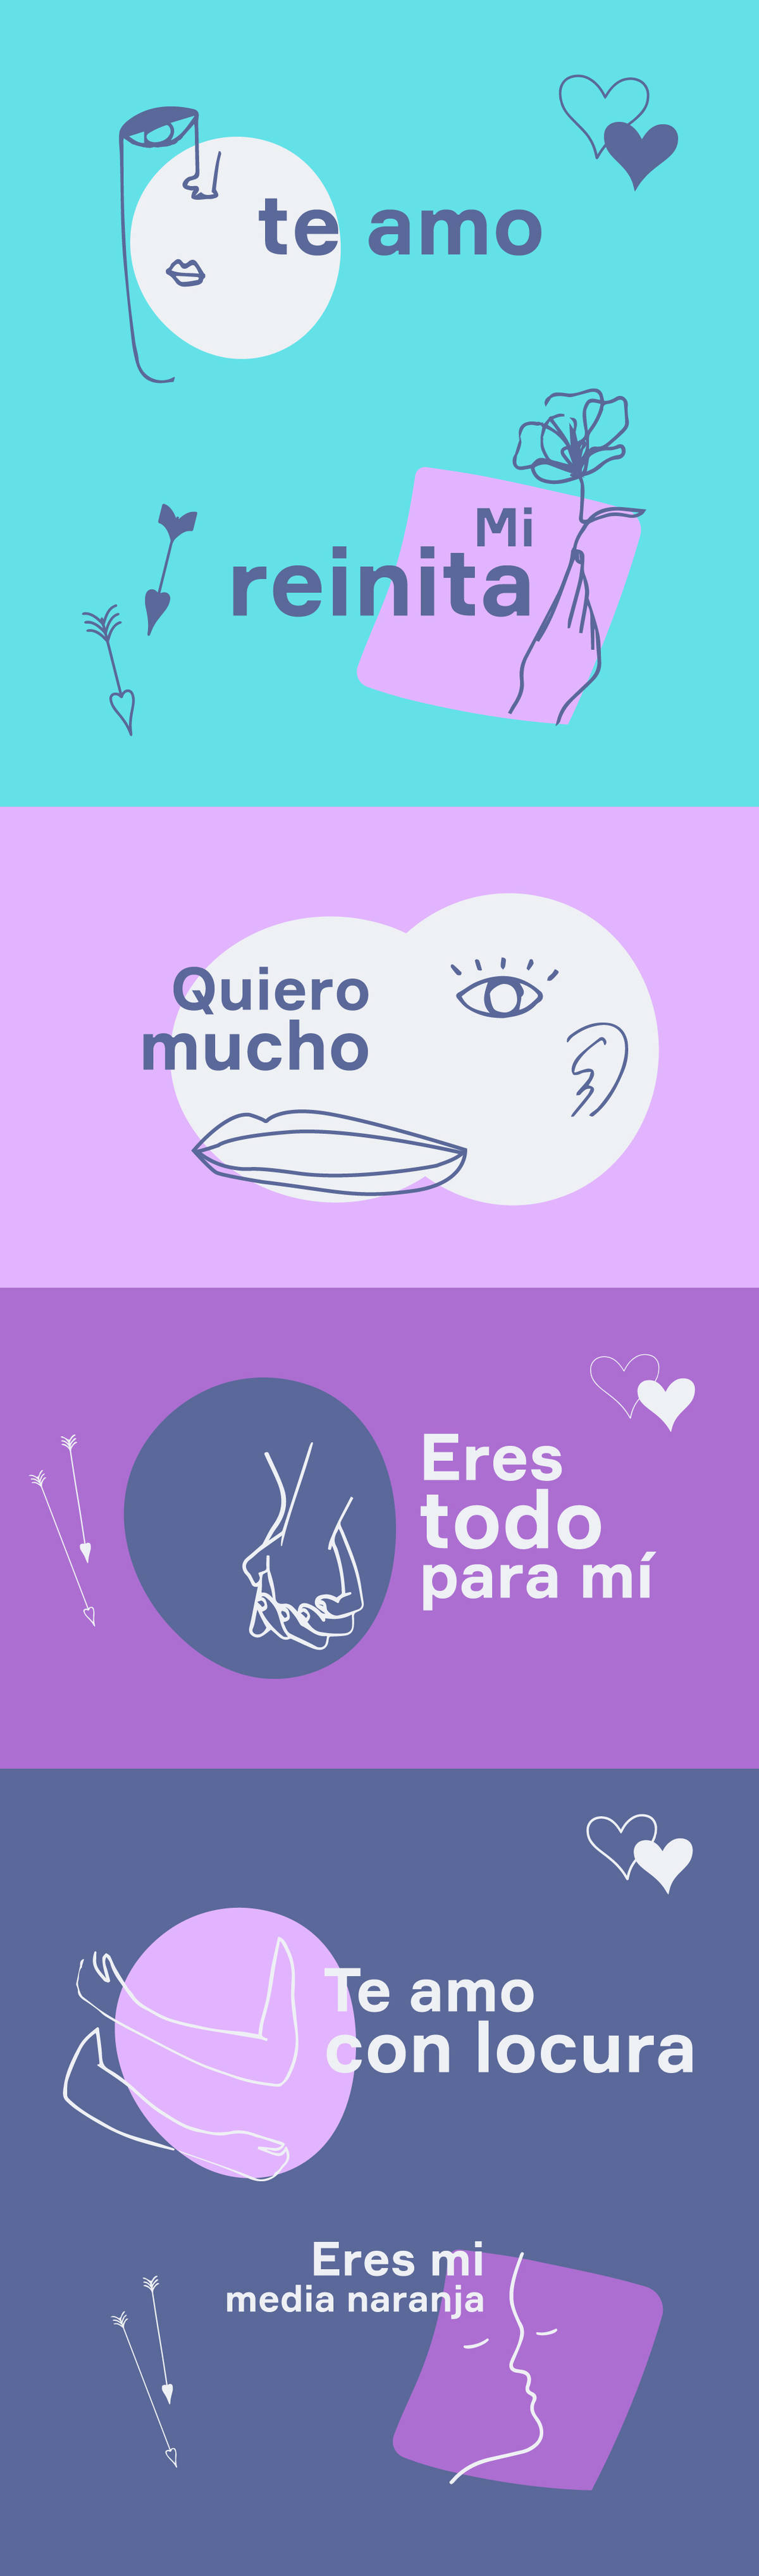 Romantic phrases in Spanish